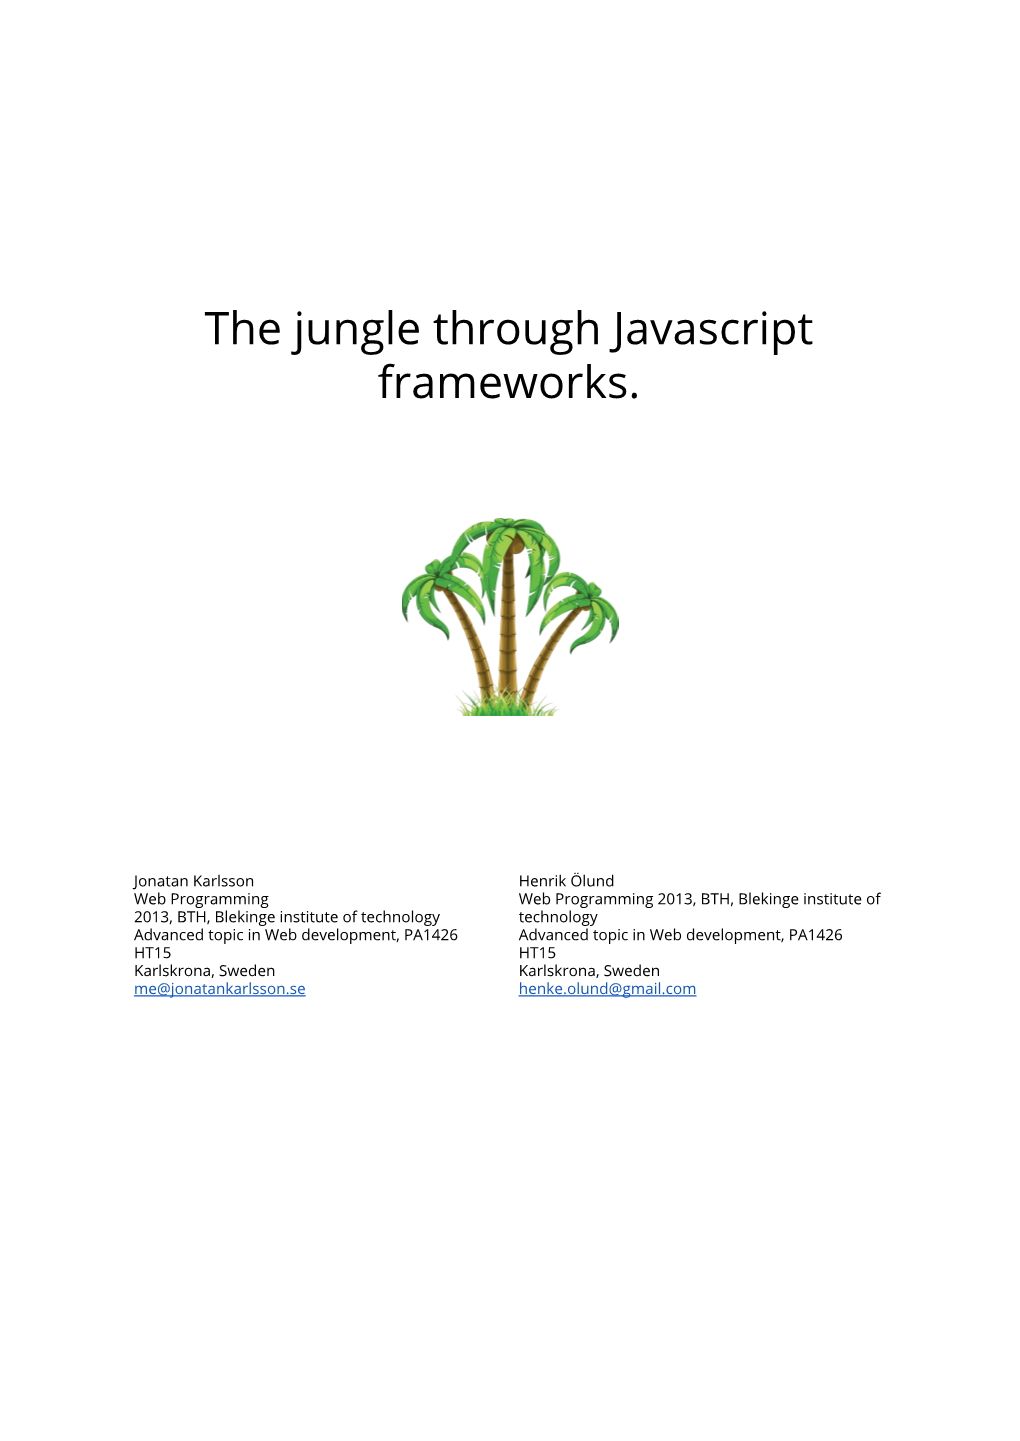 The Jungle Through Javascript Frameworks